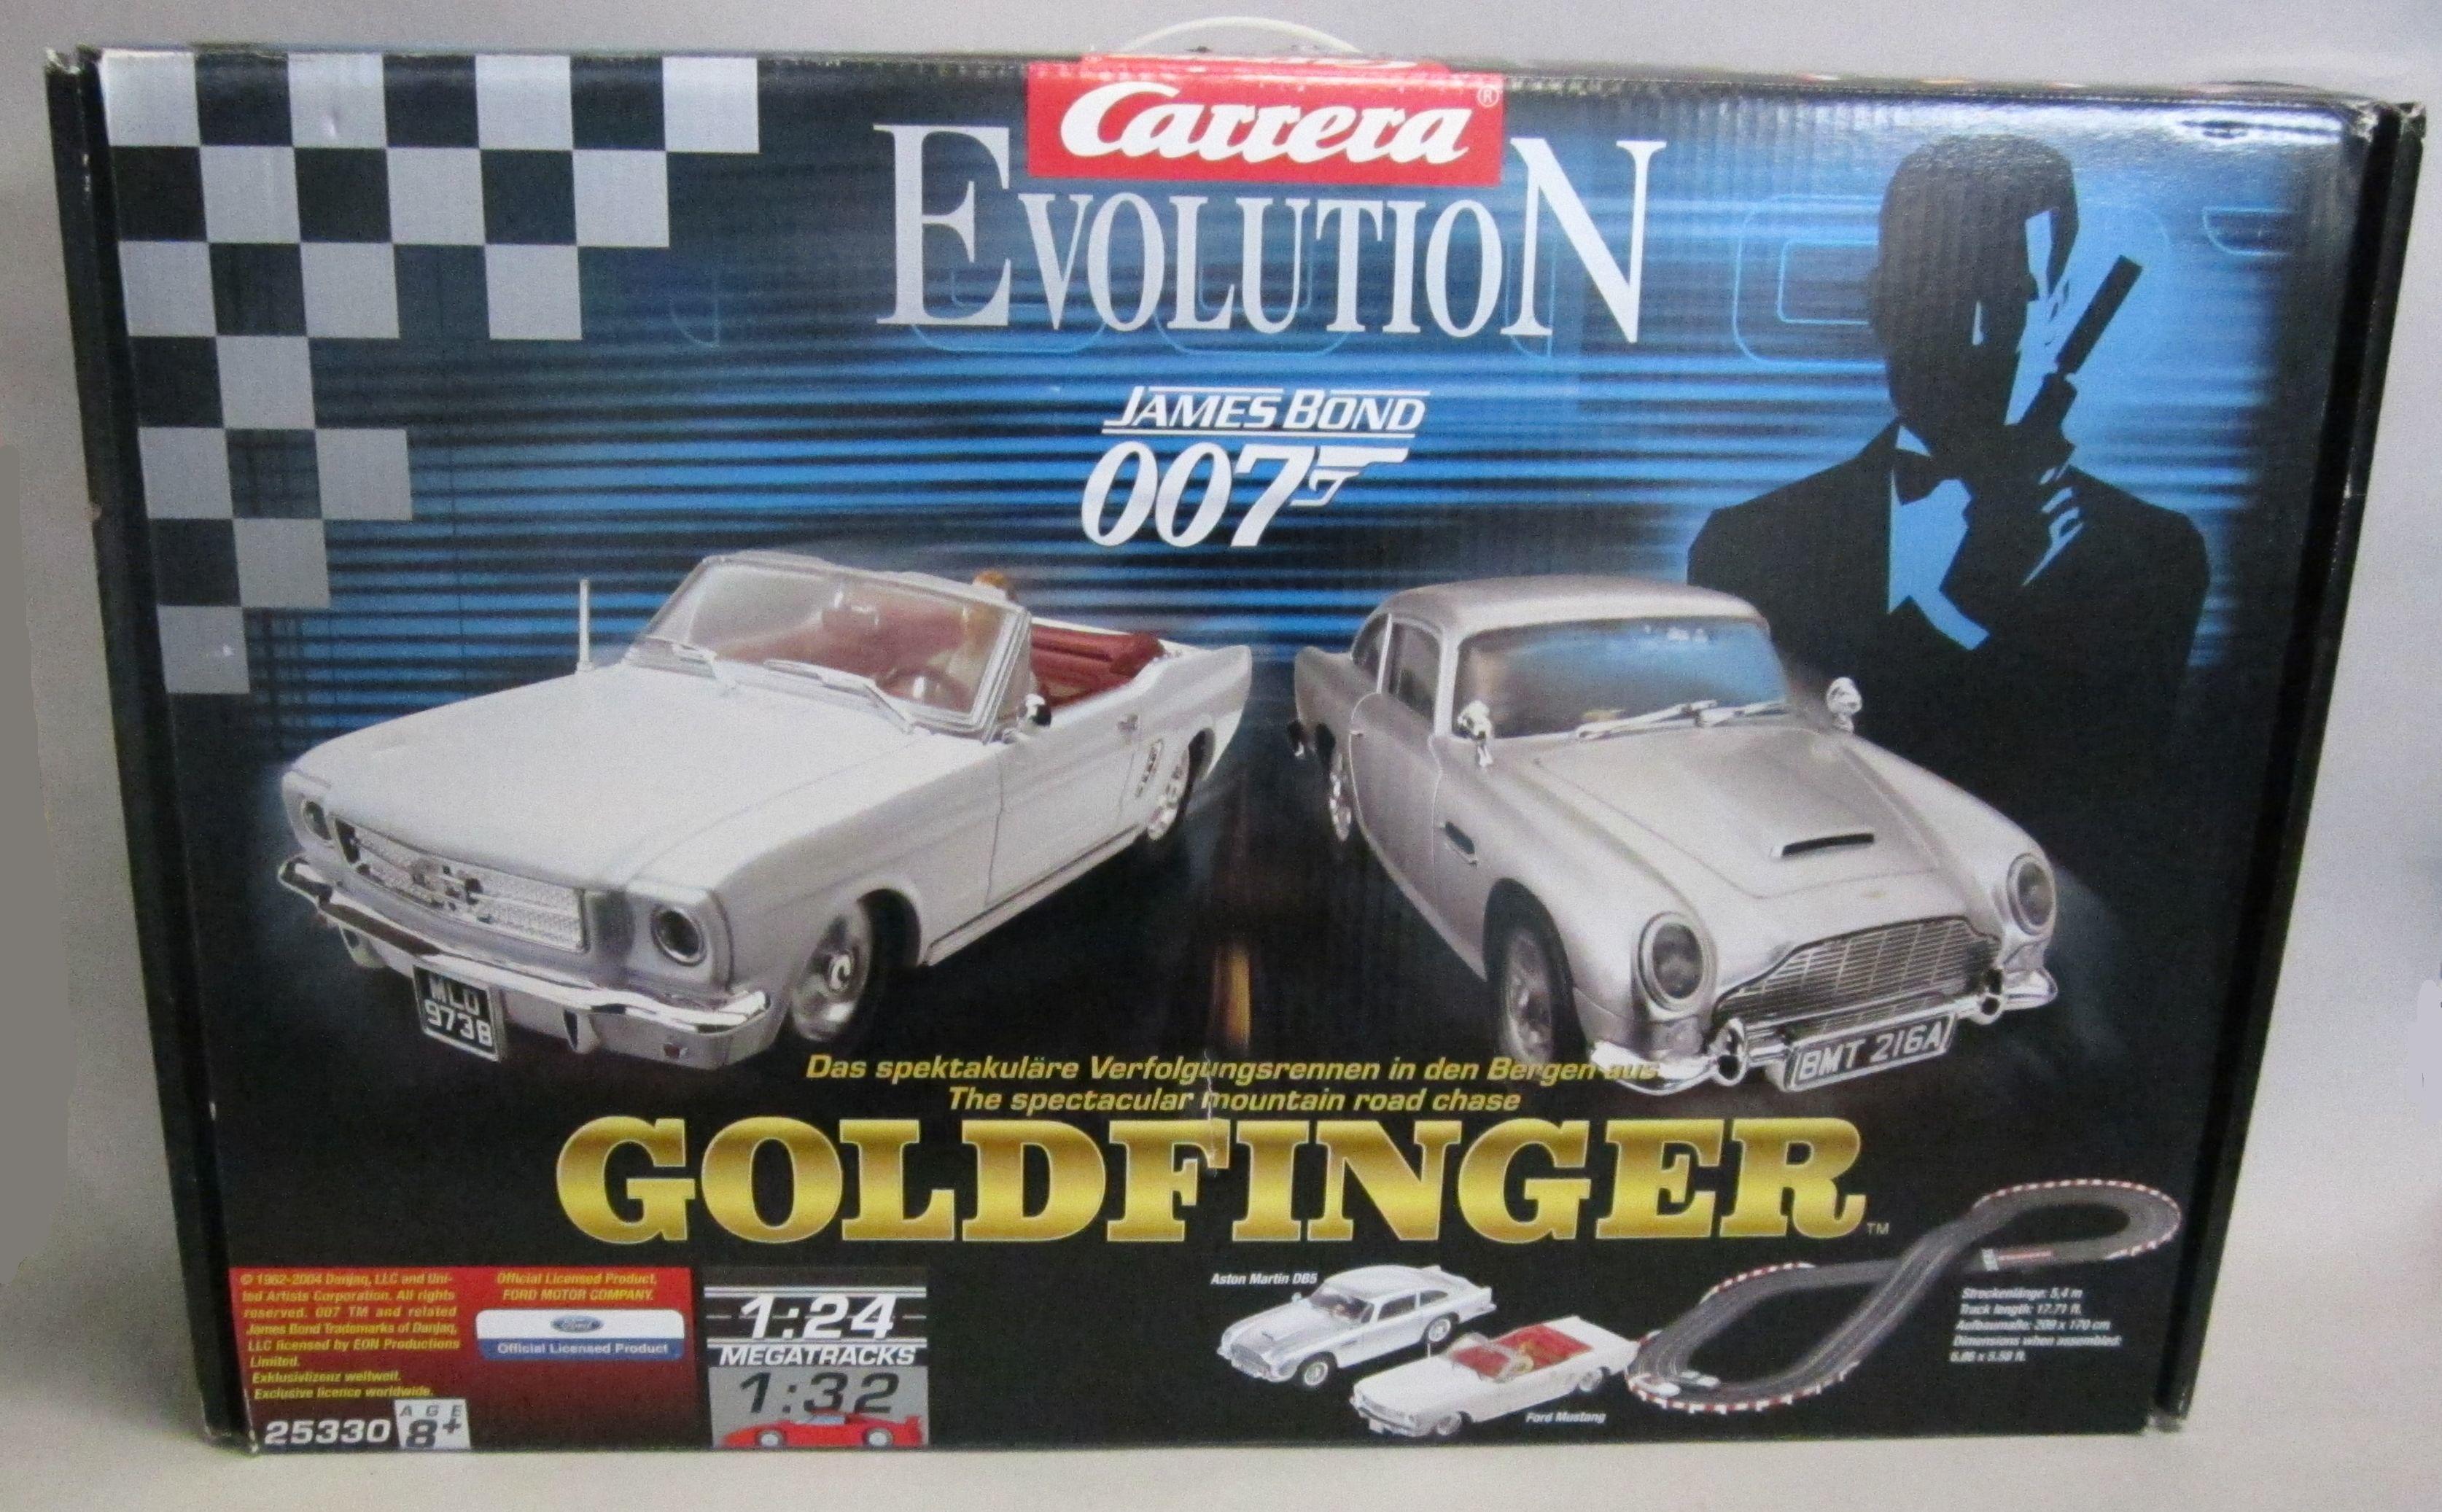 Bonhams : A James Bond 007 'Goldfinger' slot-car racing set, by Carrera  Evolution,